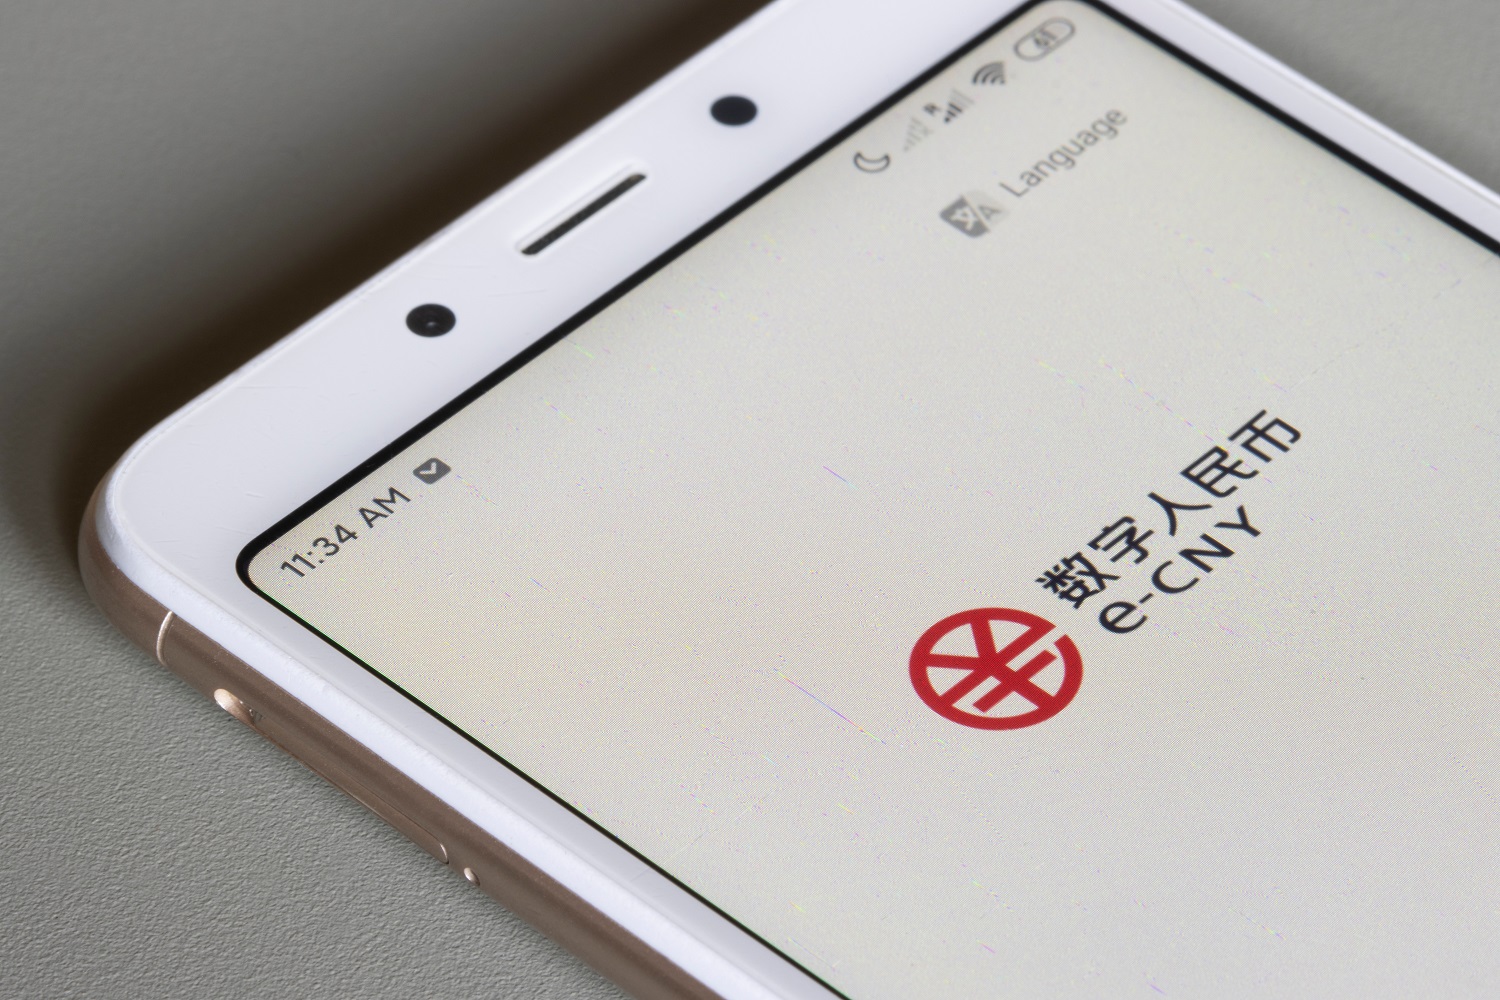 A closeup image of the e-CNY logo, the digital yuan, on a smartphone screen.